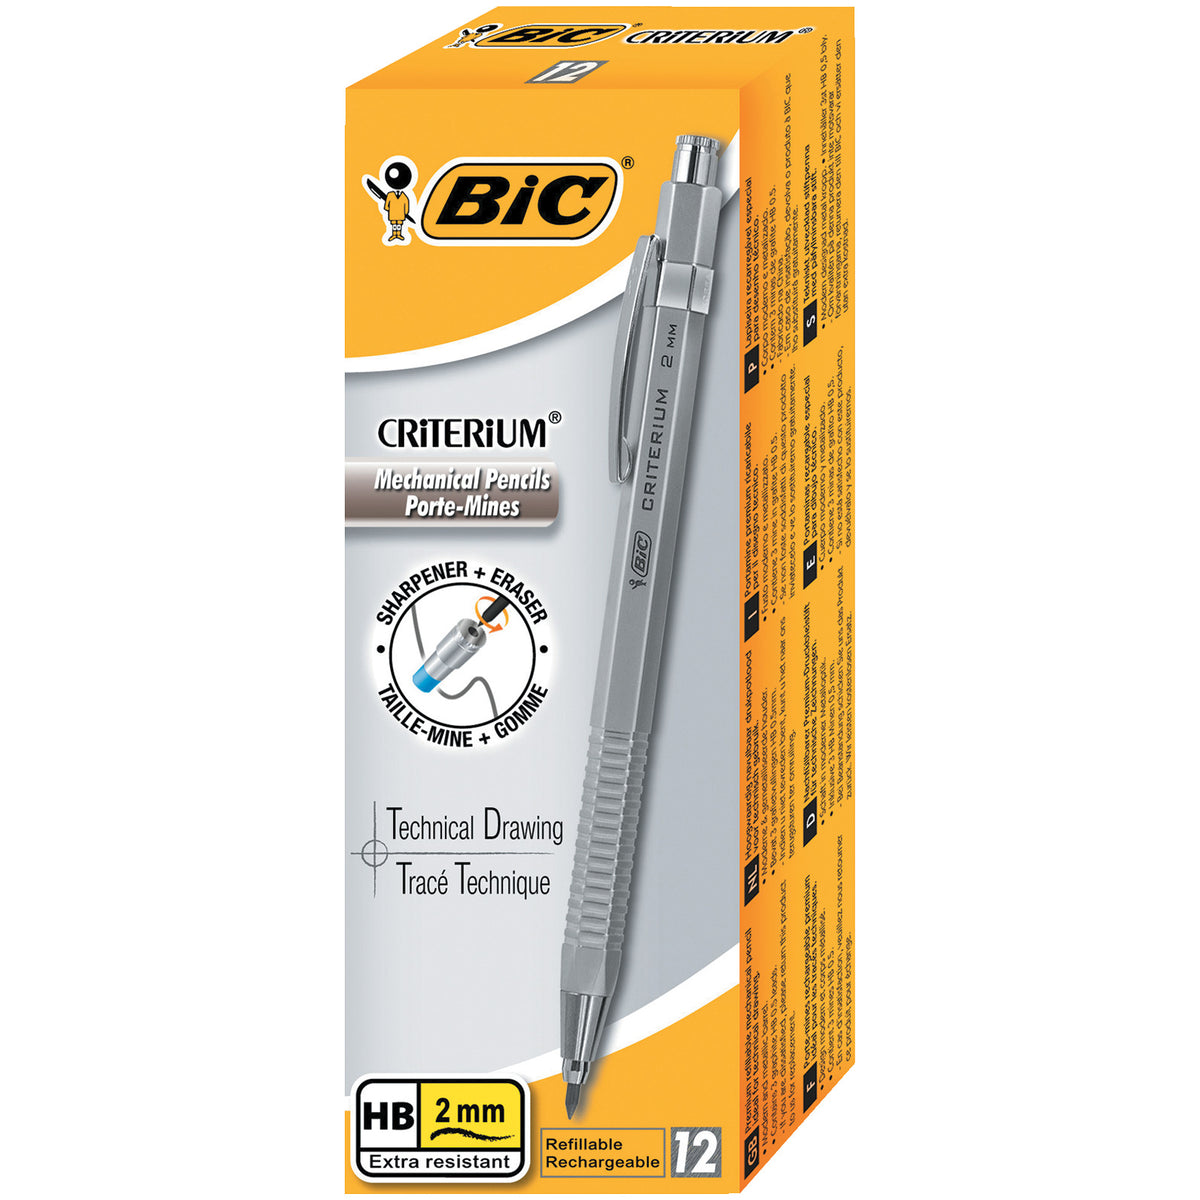 BIC Criterium 2mm HB Print Pencil - Black or White Shank, 1